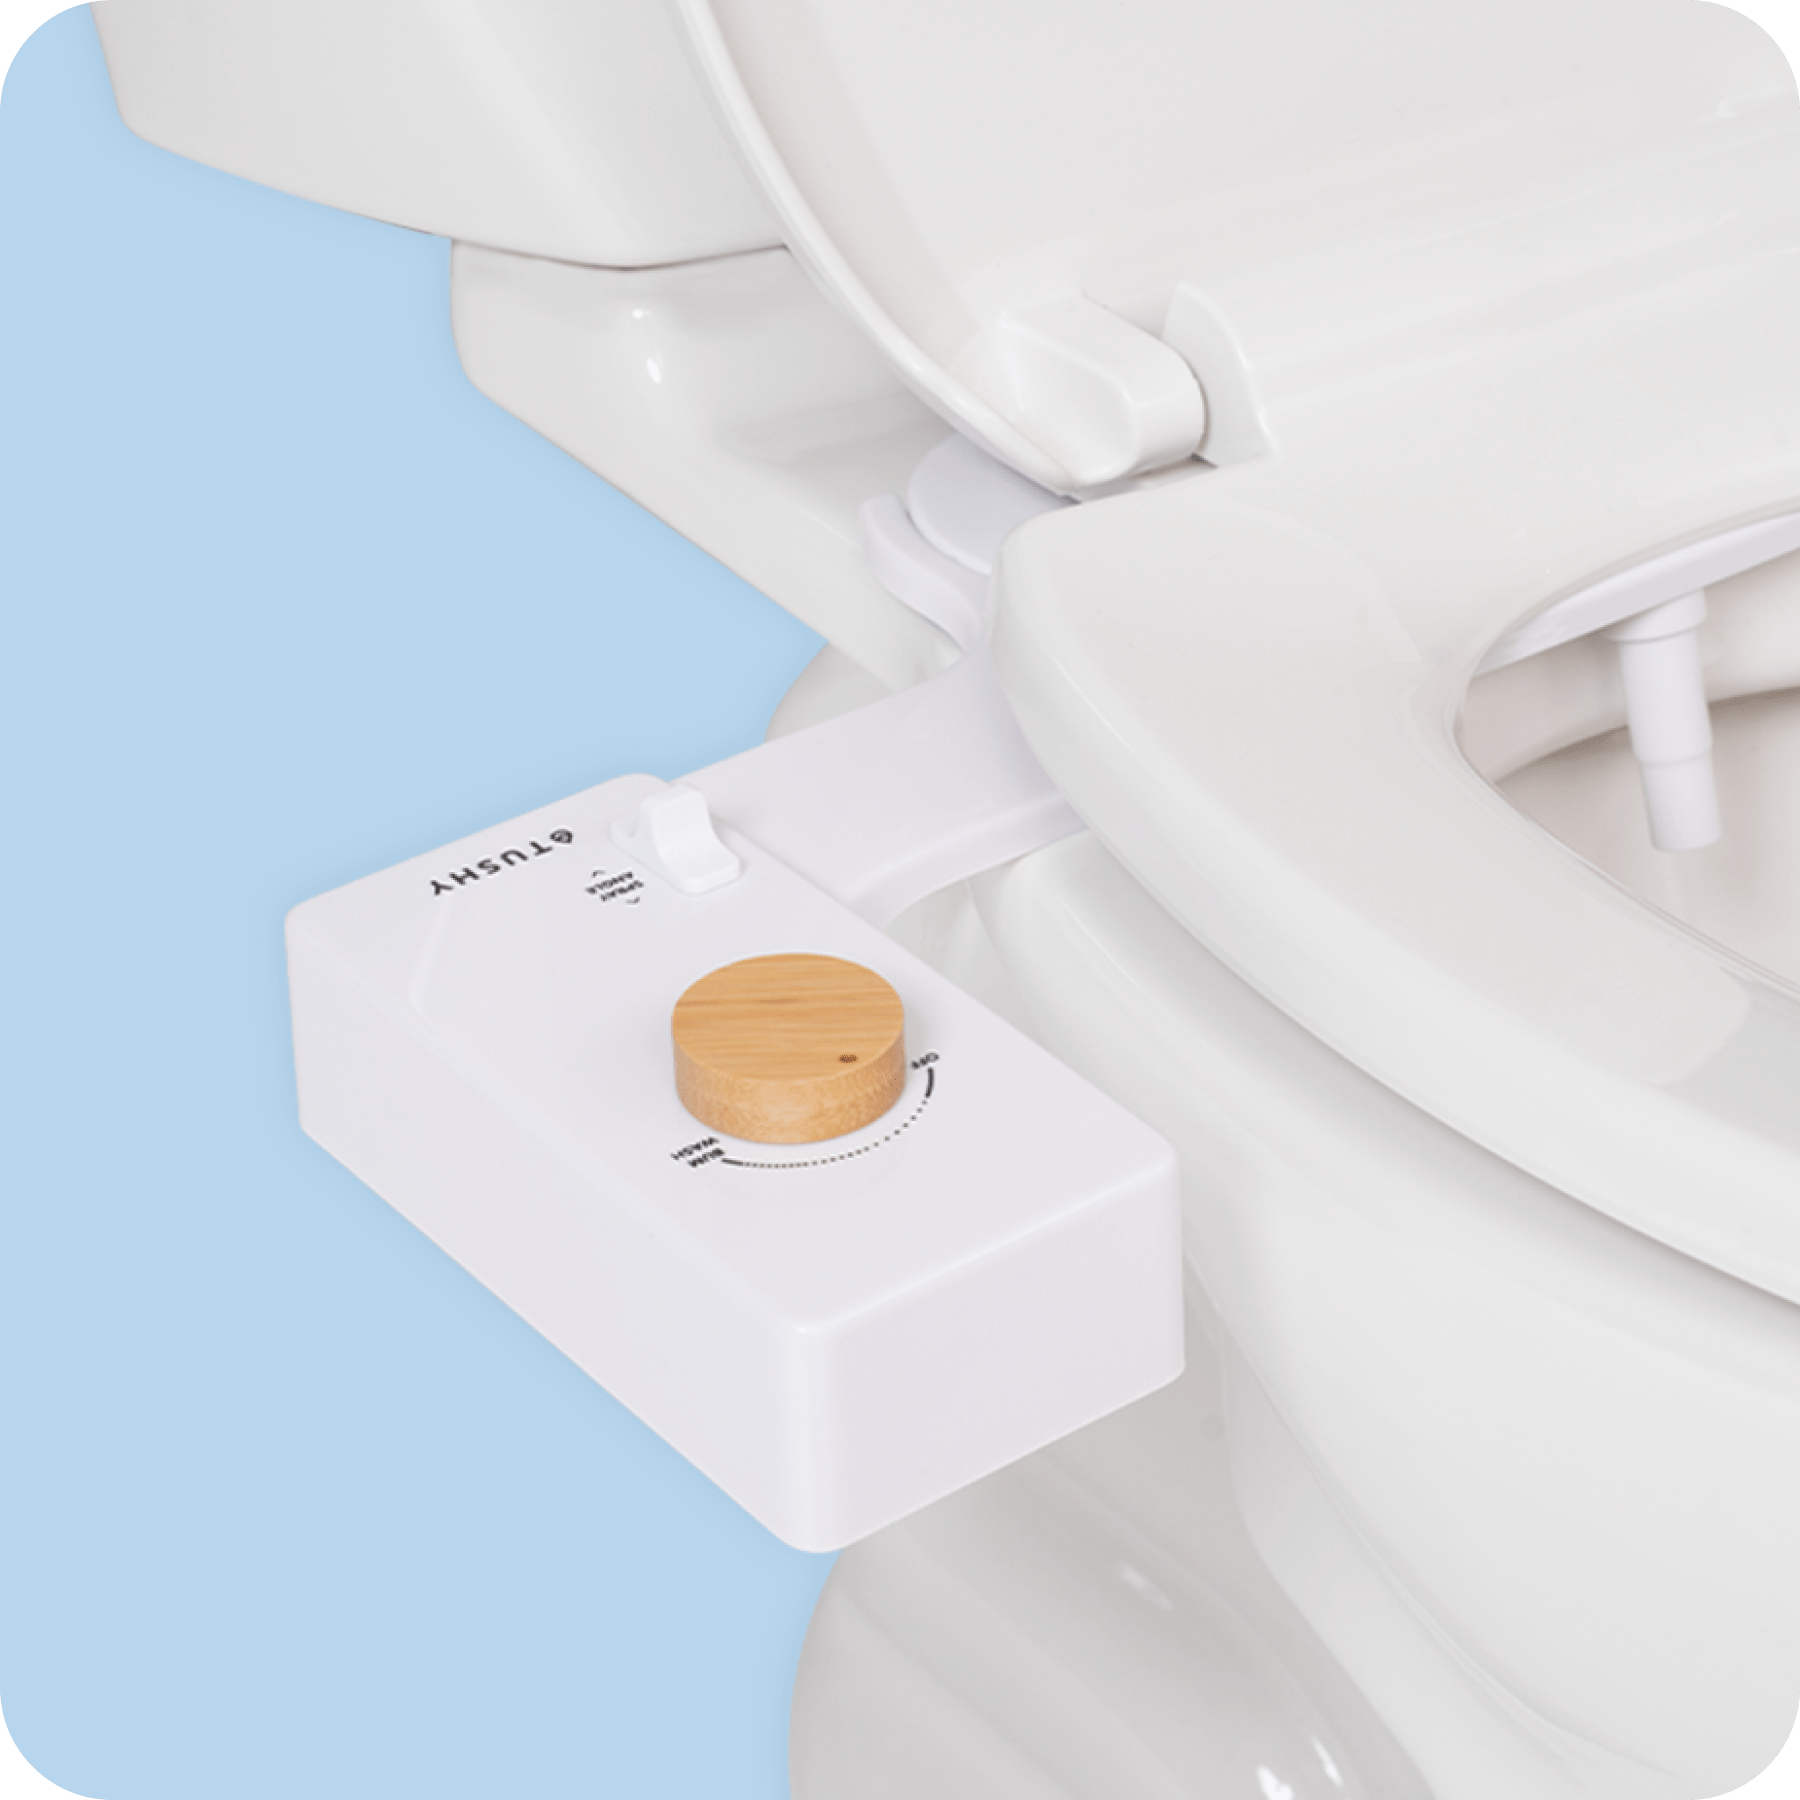 TUSHY Classic 3.0 - Bidet Toilet Seat Attachment